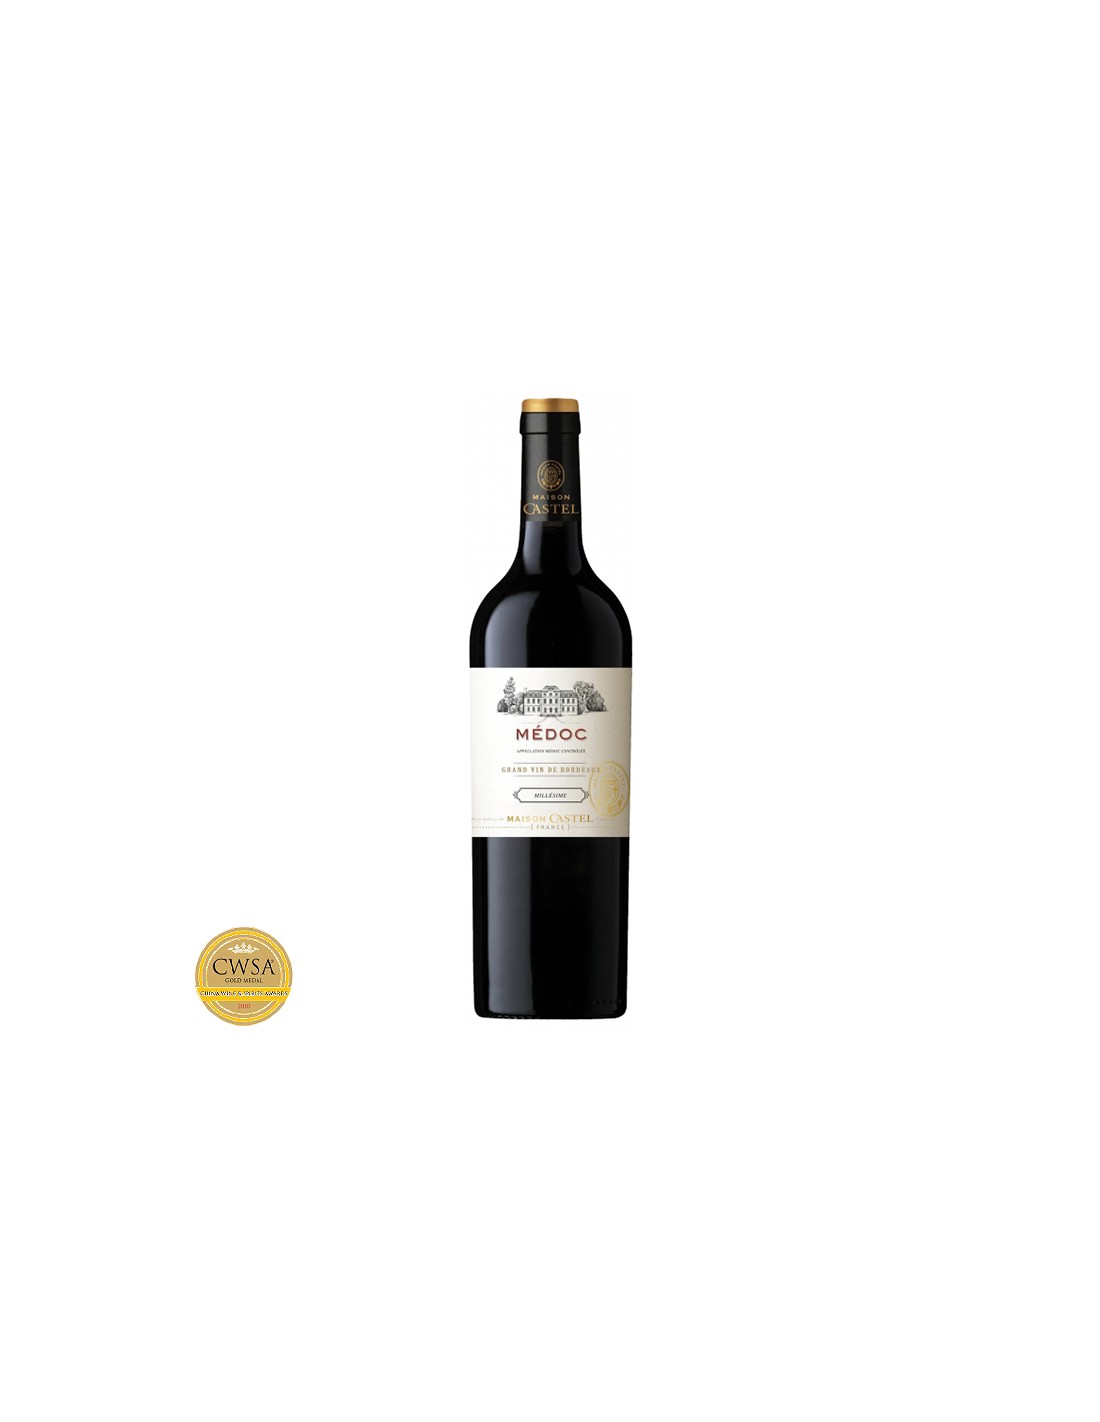 Vin rosu sec, Medoc, Maison Castel Pays d’Oc, 13% alc., 0.75L, Franta alcooldiscount.ro